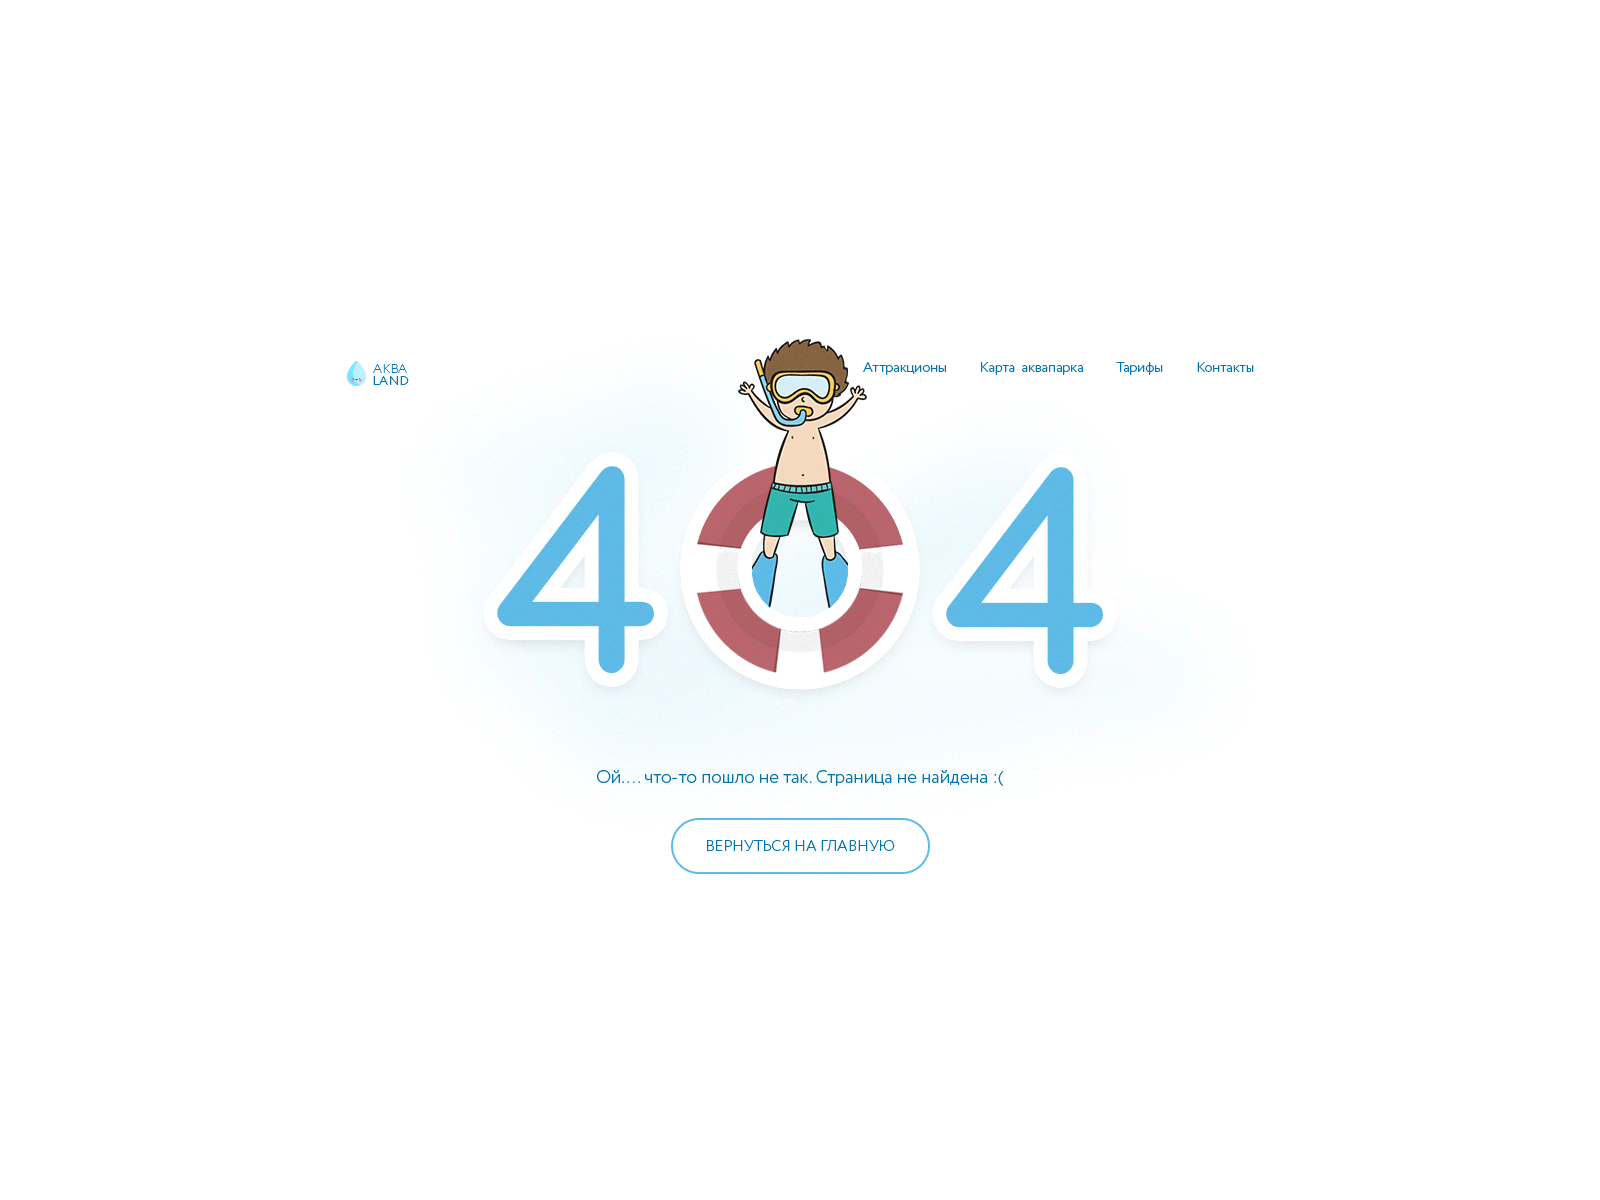 404 404 404 design 404 error 404 error page 404 page concept design page not found webdesign